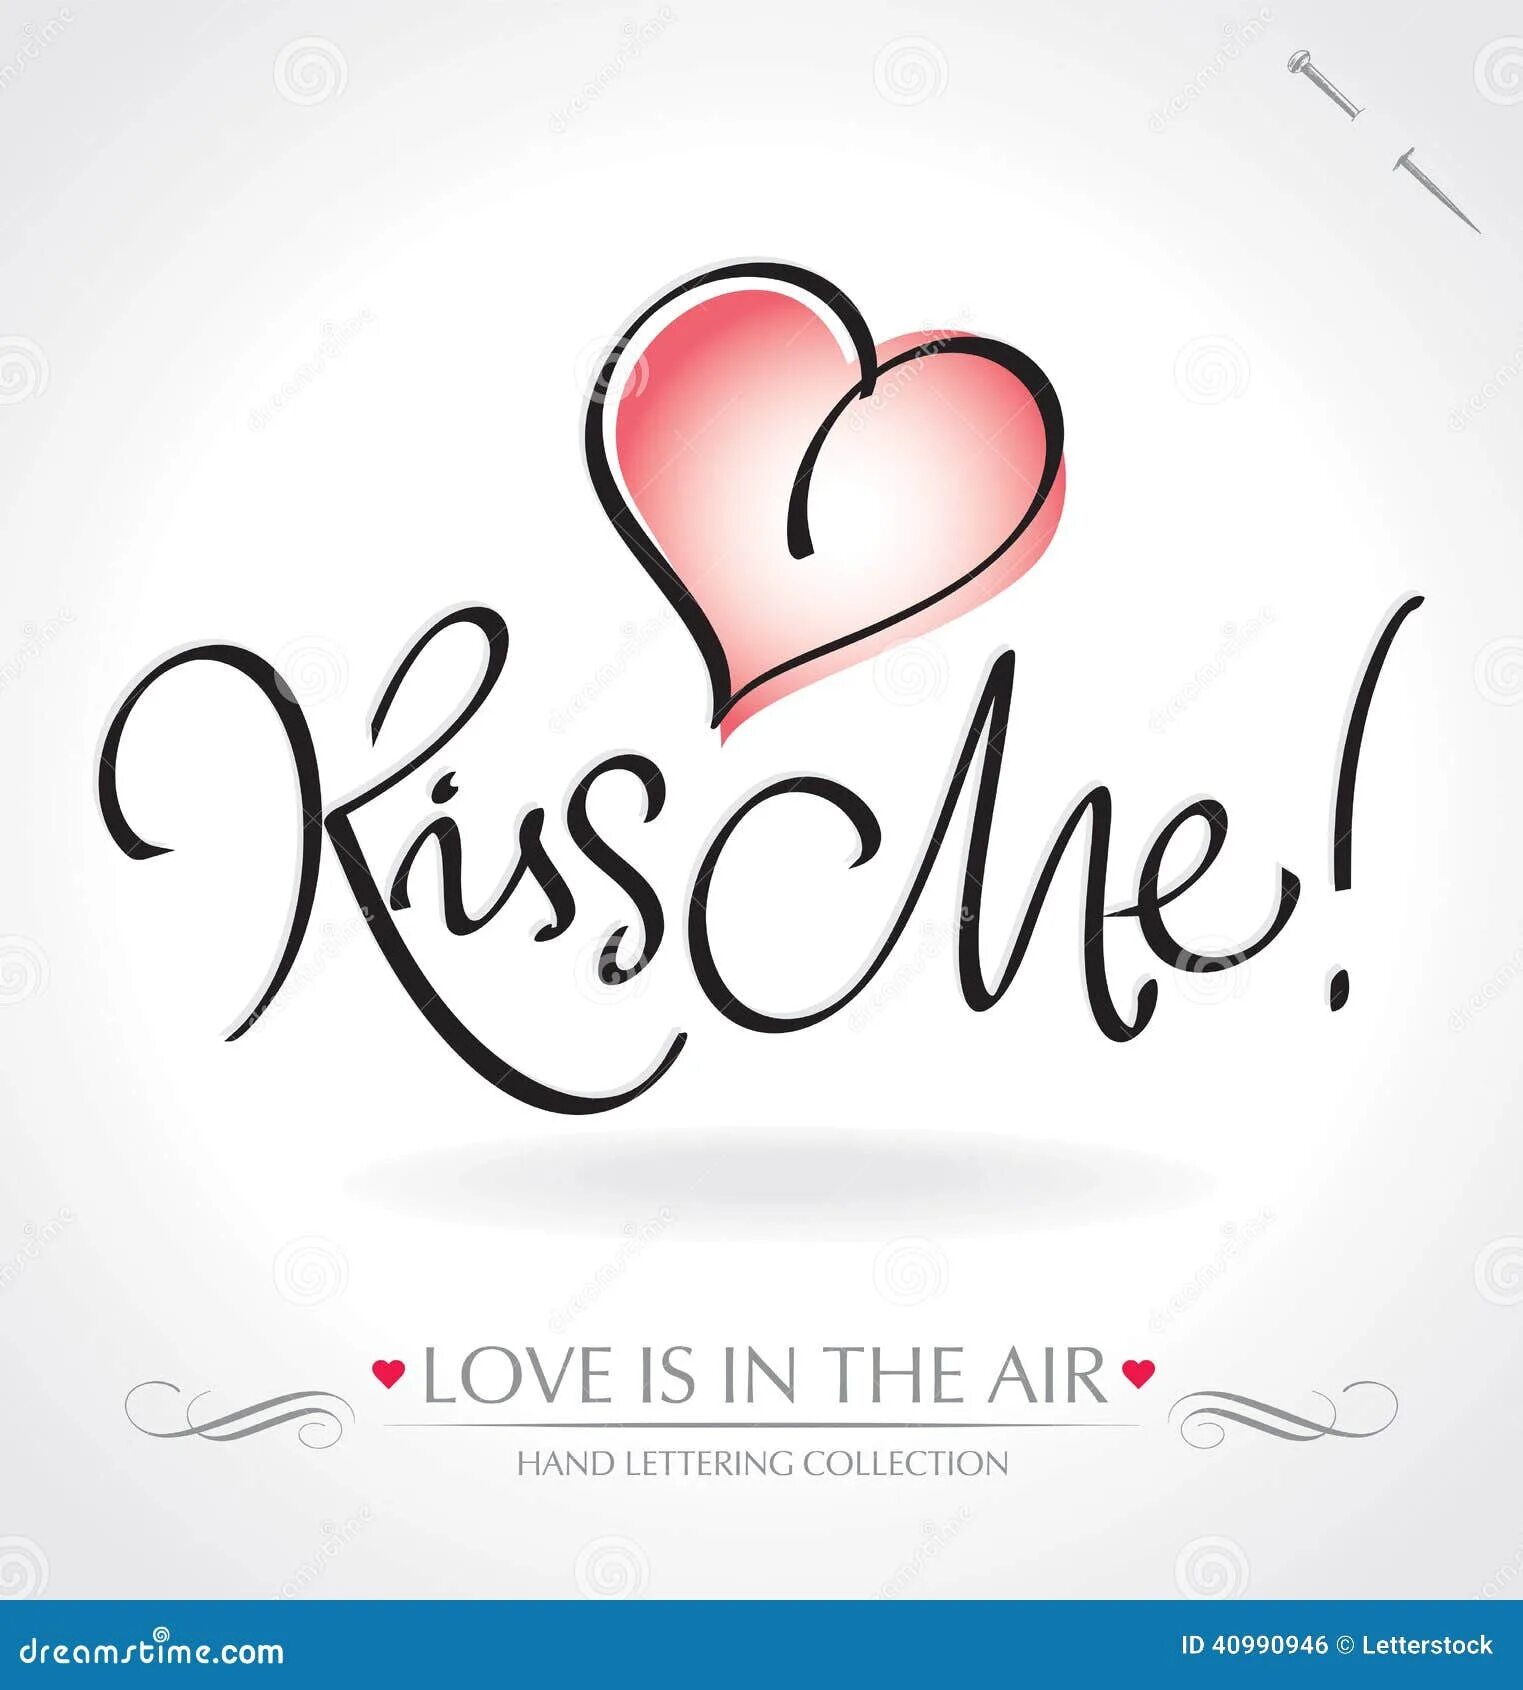 Как пишется поцелую. Надпись Kiss me. Kiss стилизованная надпись. Красивая надпись кис. Kiss me красиво написано.